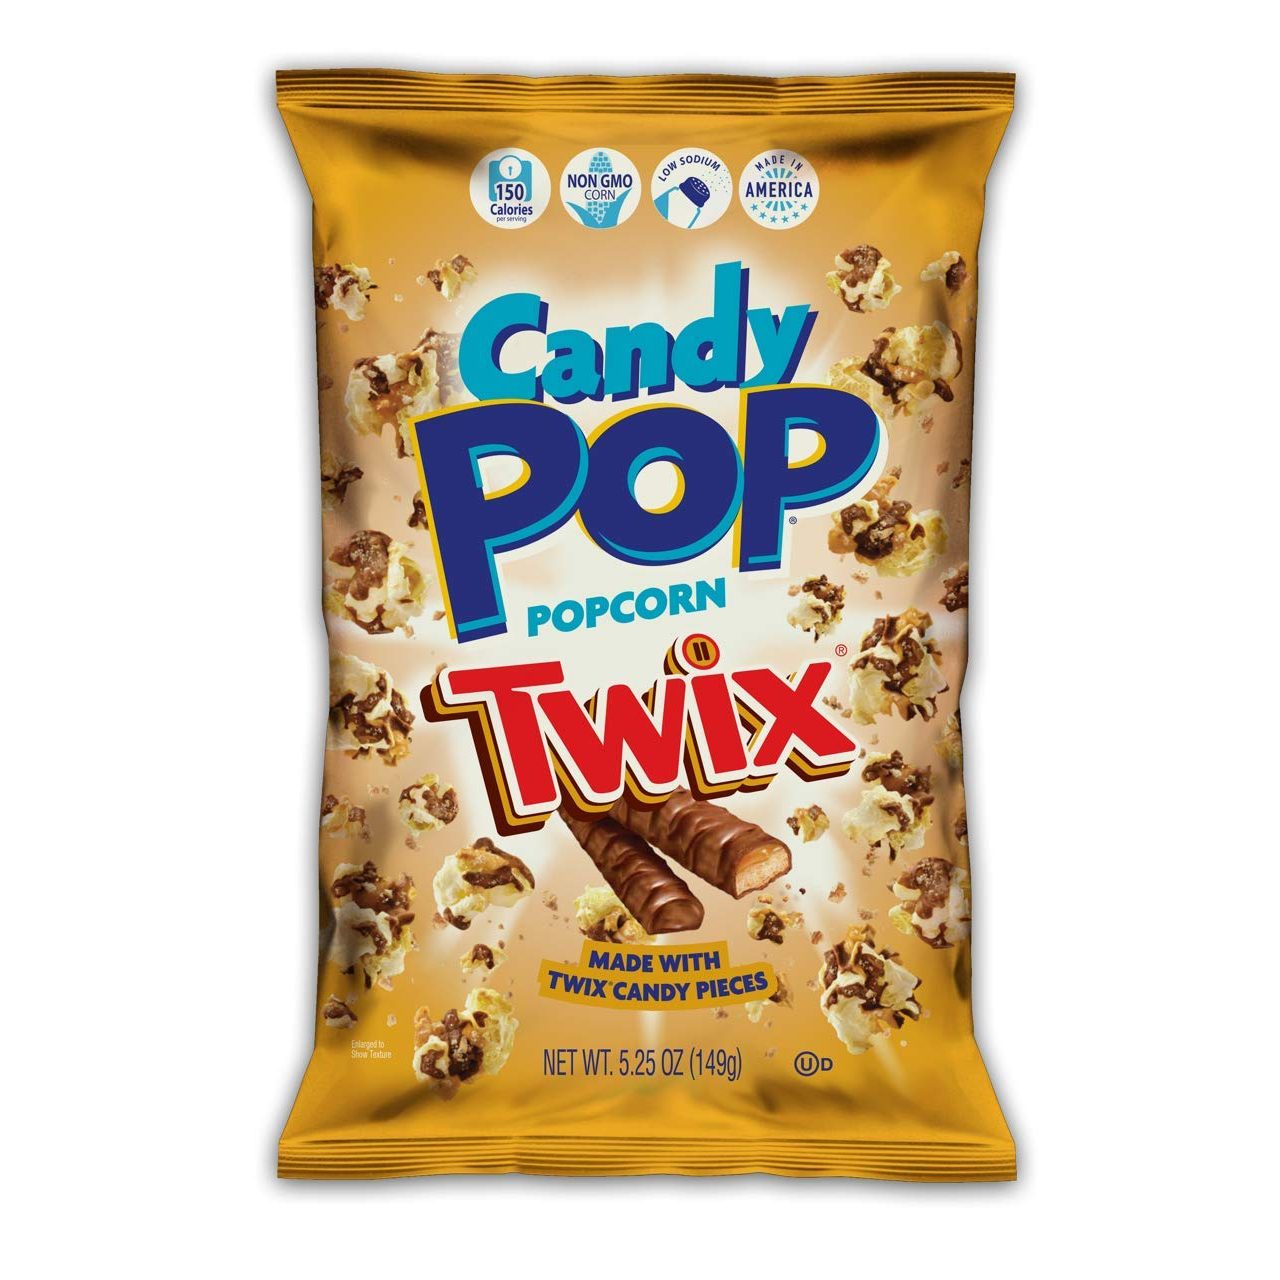 Candy Pop Popcorn Twix 149g - Large